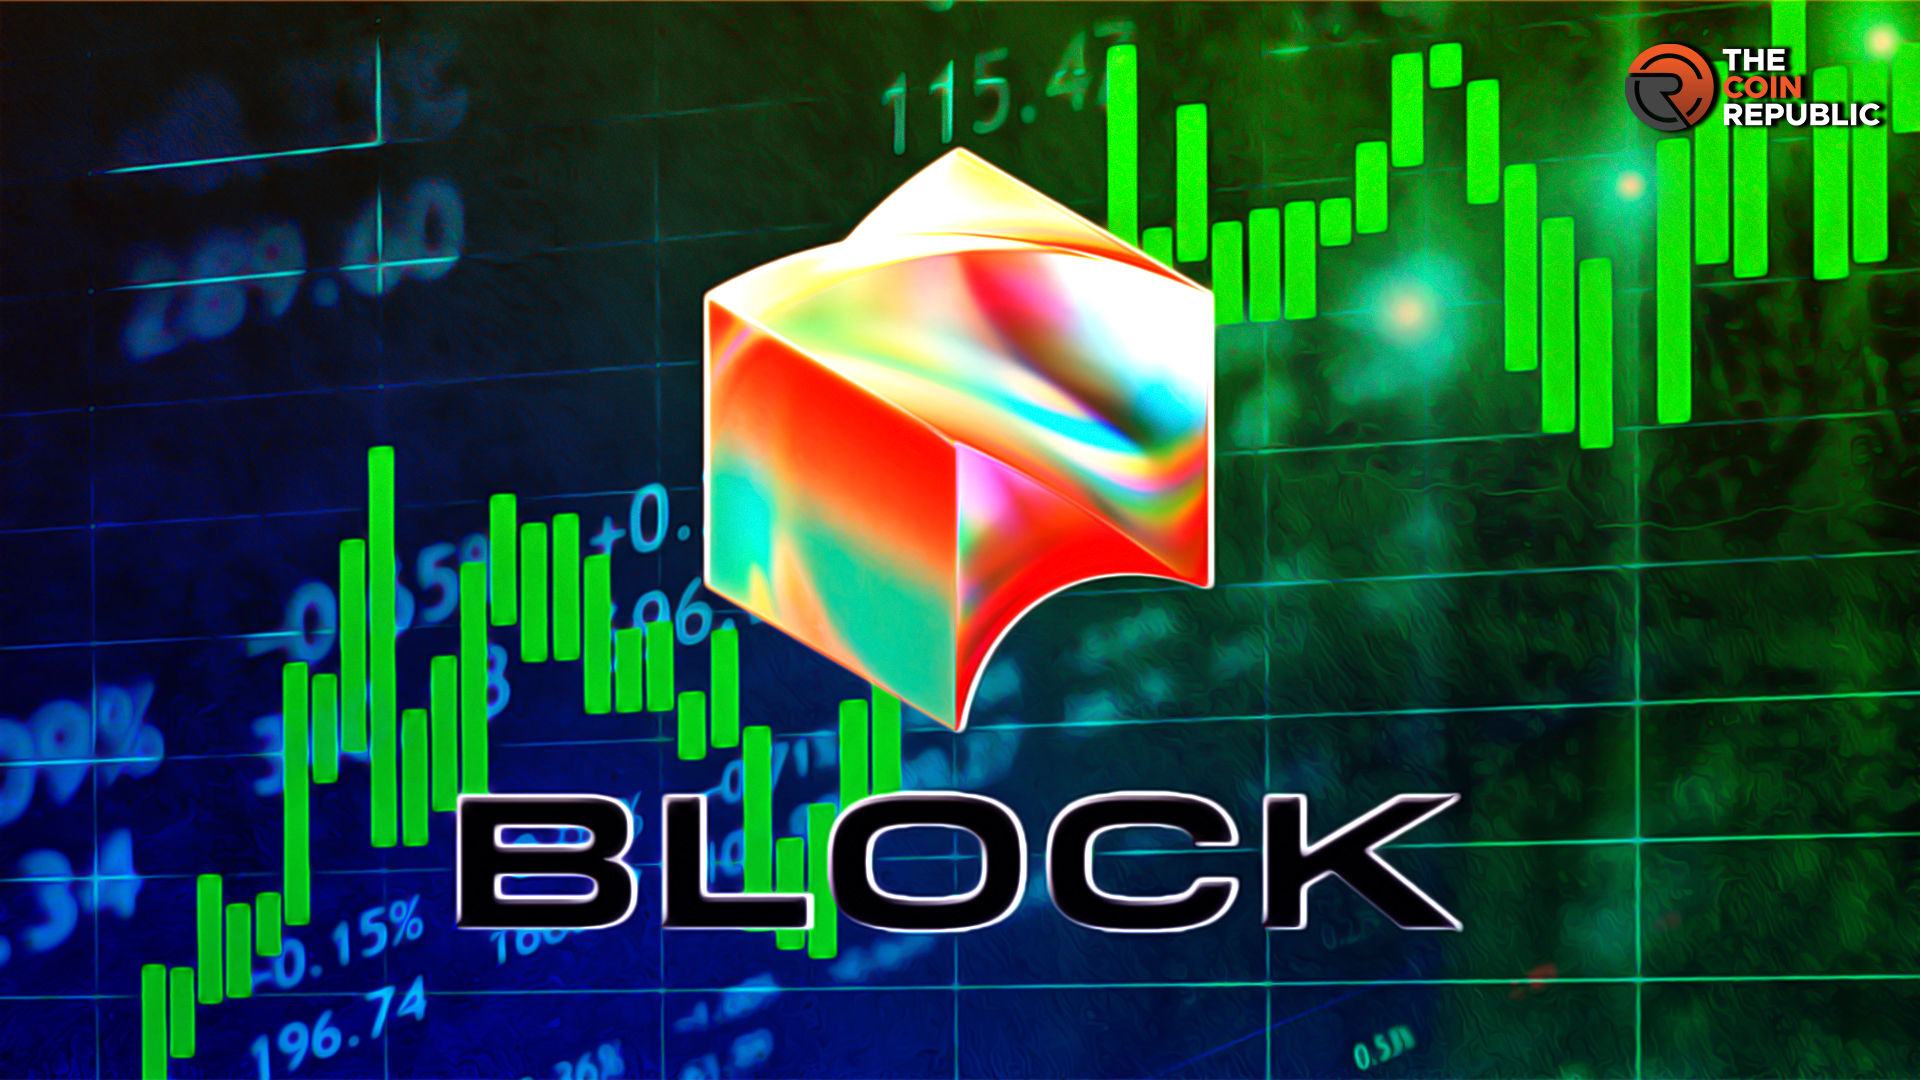 Sq Stock Forecast: Will Block Stock Breach the $50 Mark?